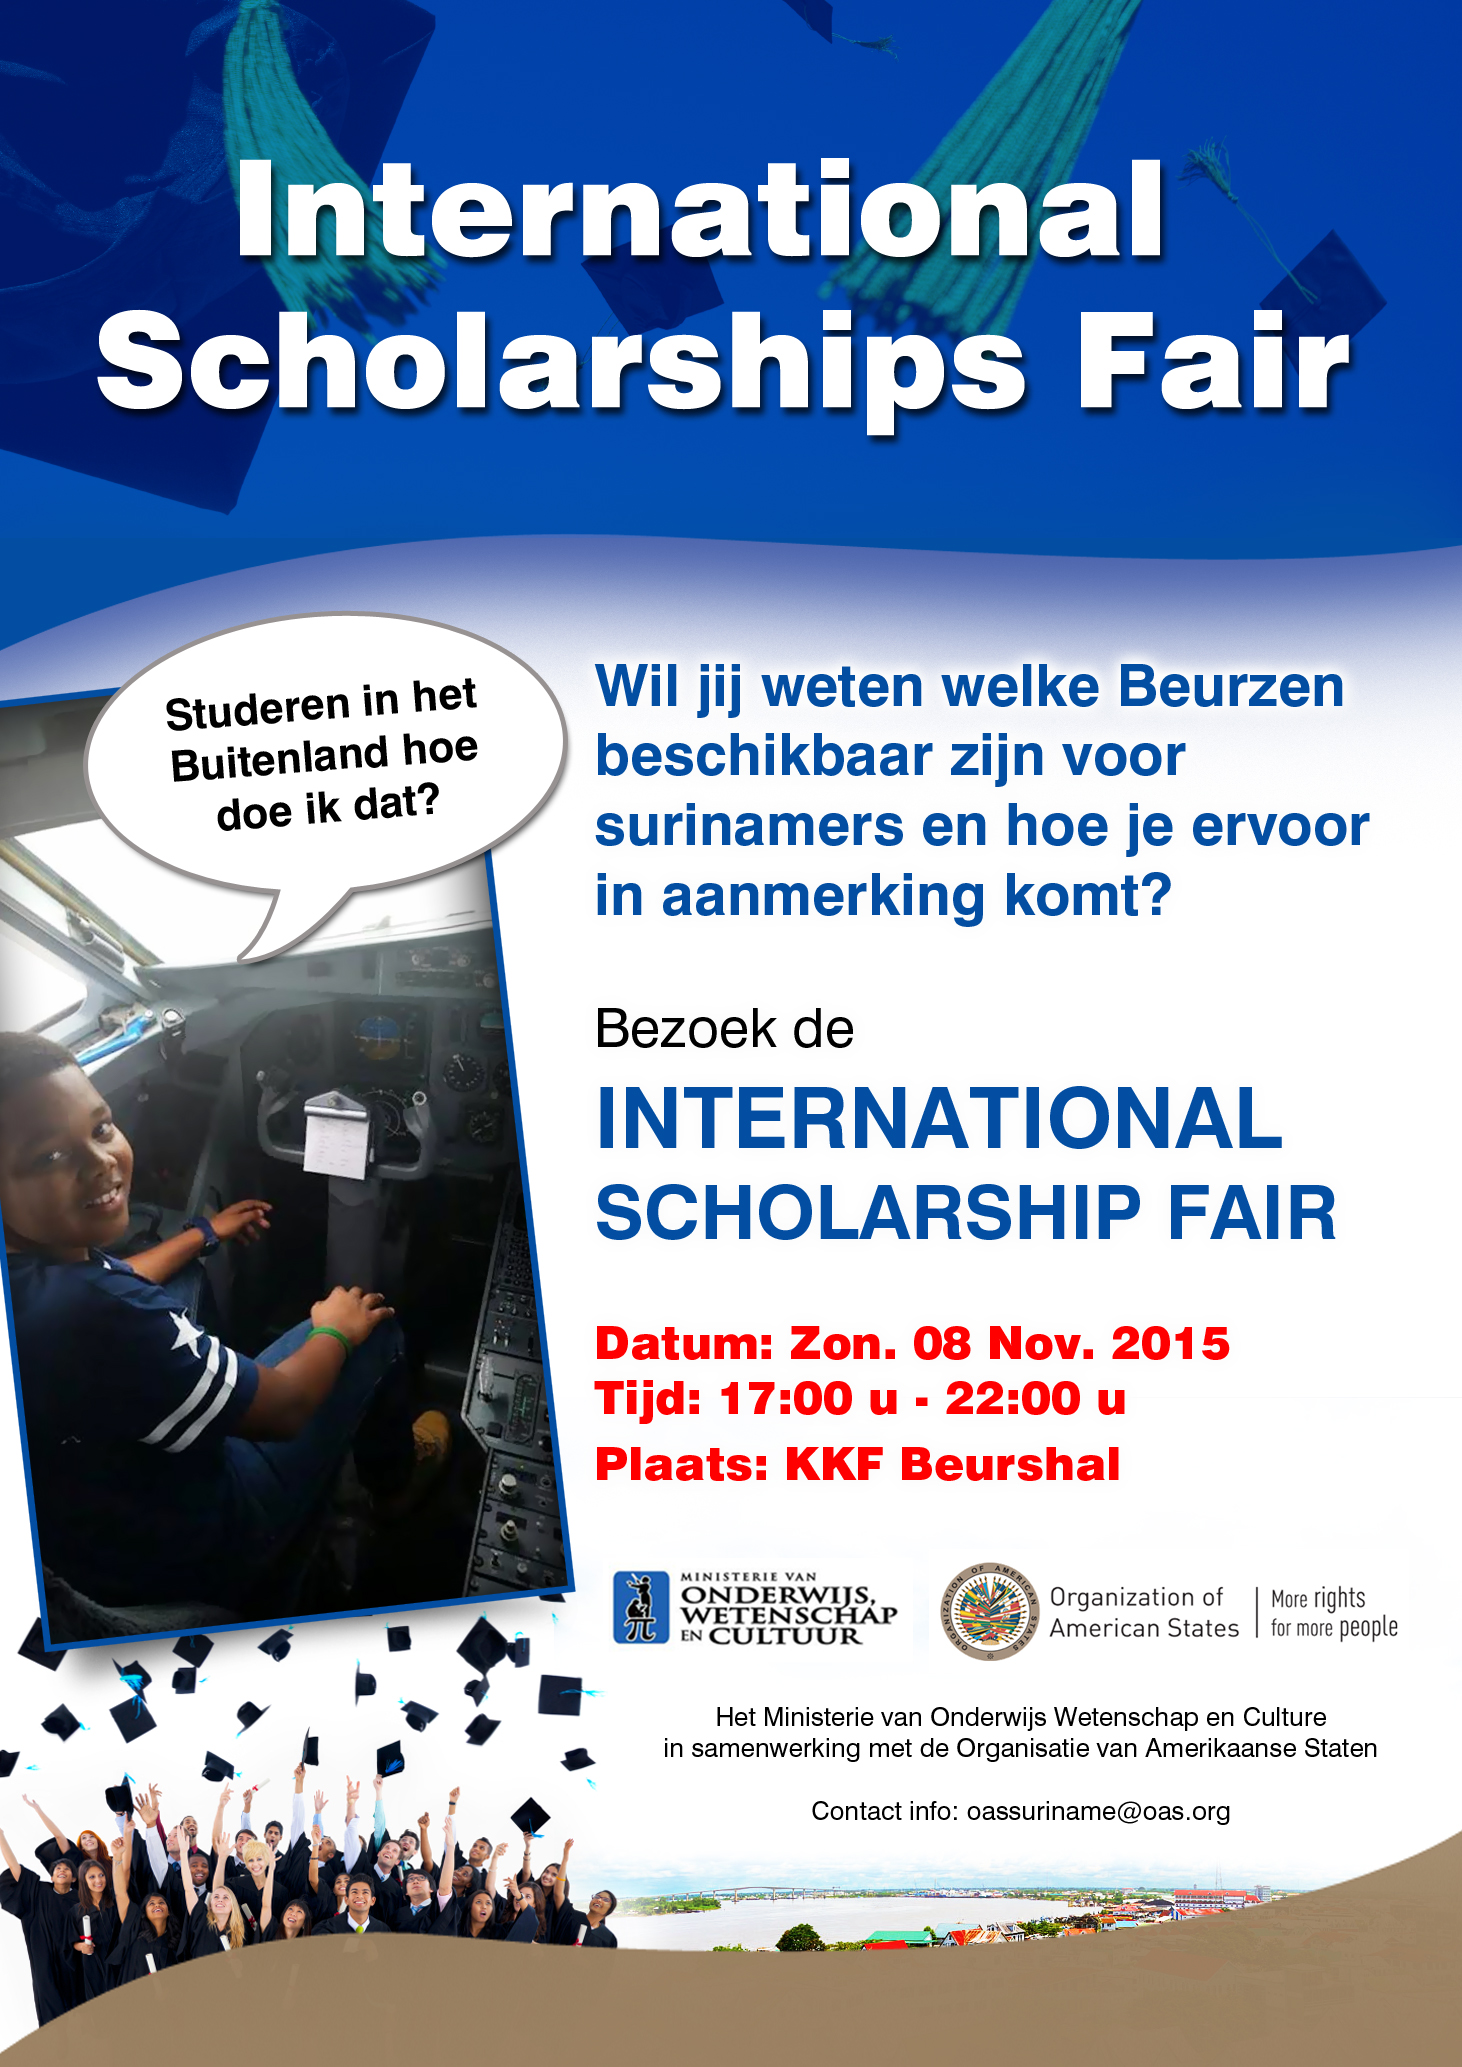 International Scholarship Fair(November 8, 2015)